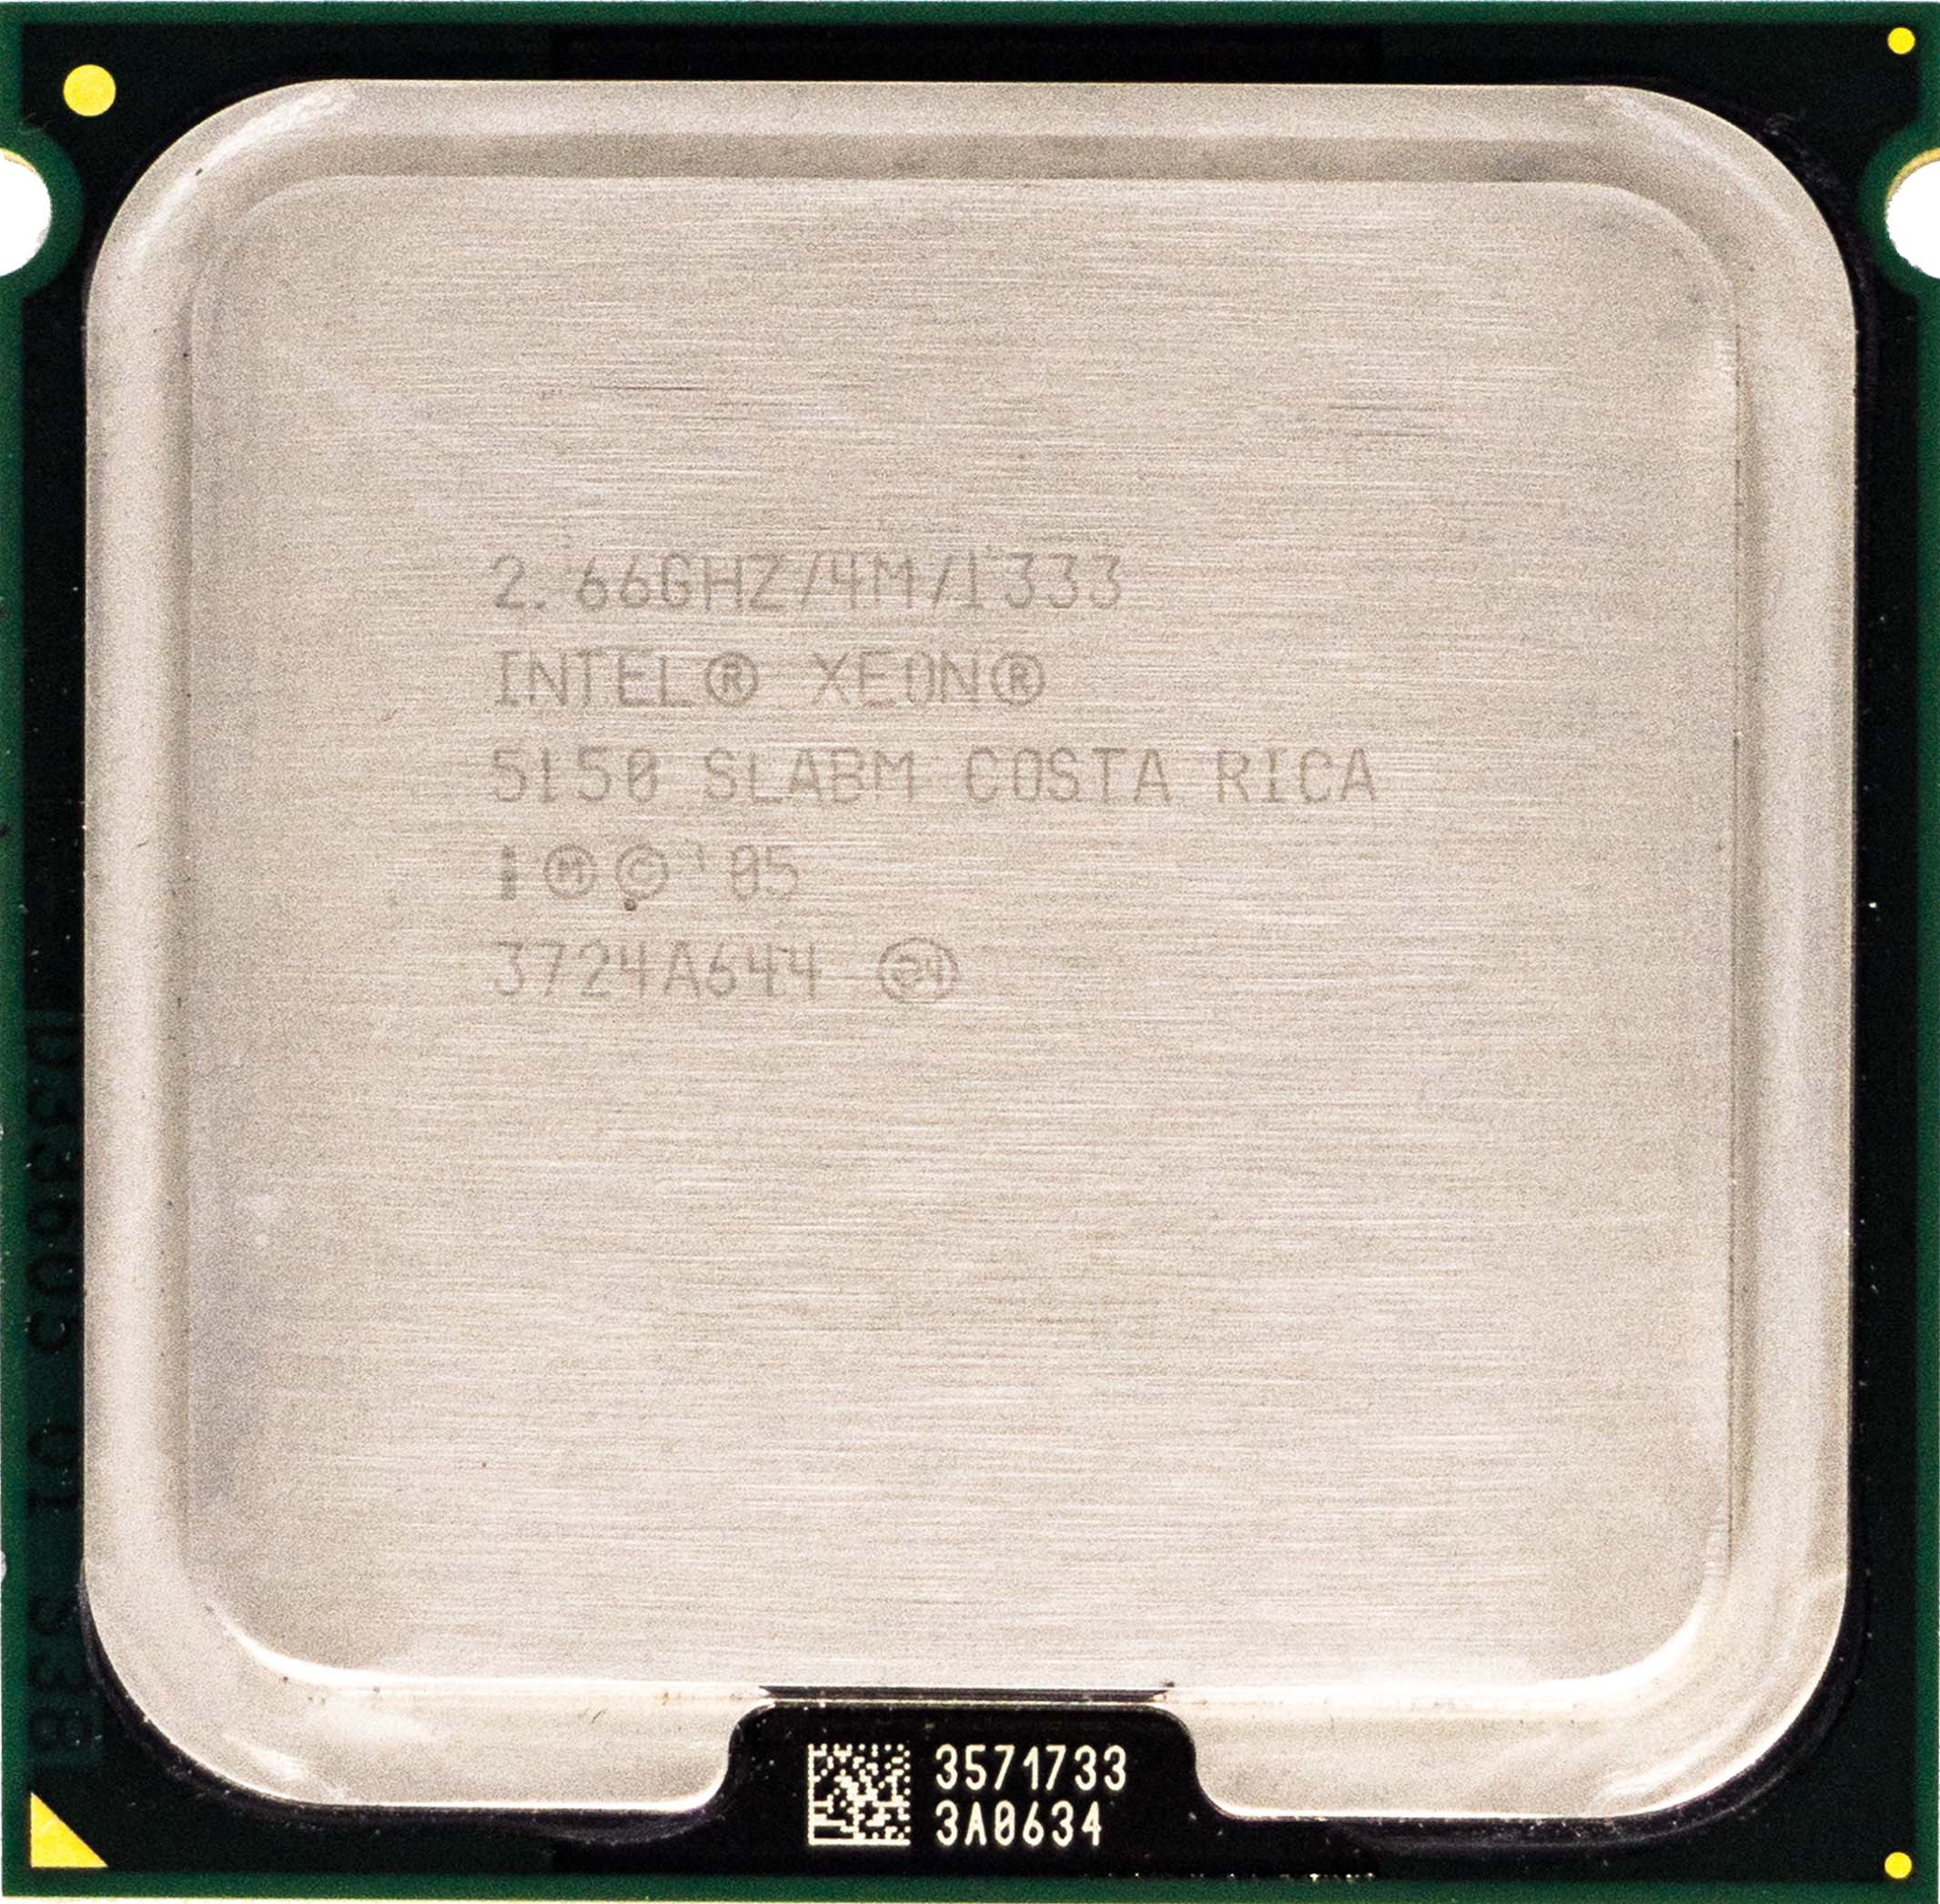 Intel Xeon 5150 (SLABM) 2.66Ghz Dual (2) Core LGA771 65W CPU